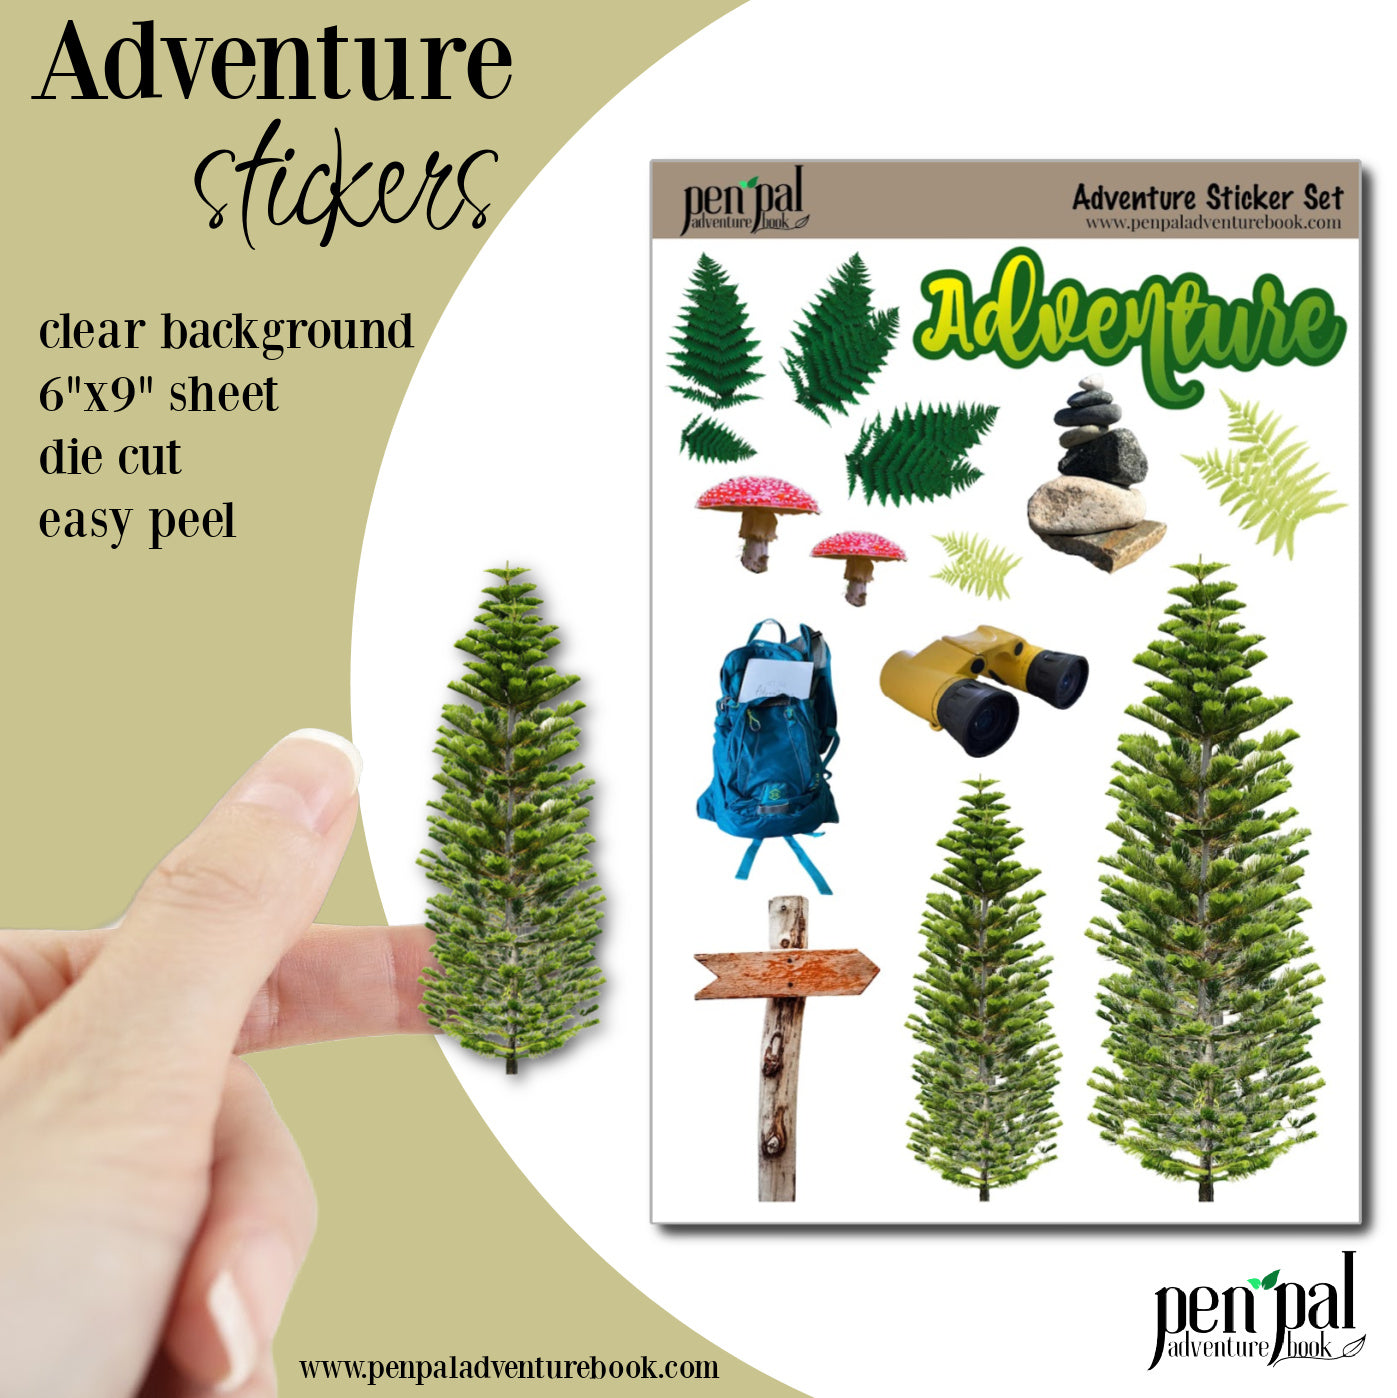 Pen Pal Adventure Book with Sticker Set - ADVENTURE HIKING STICKERS